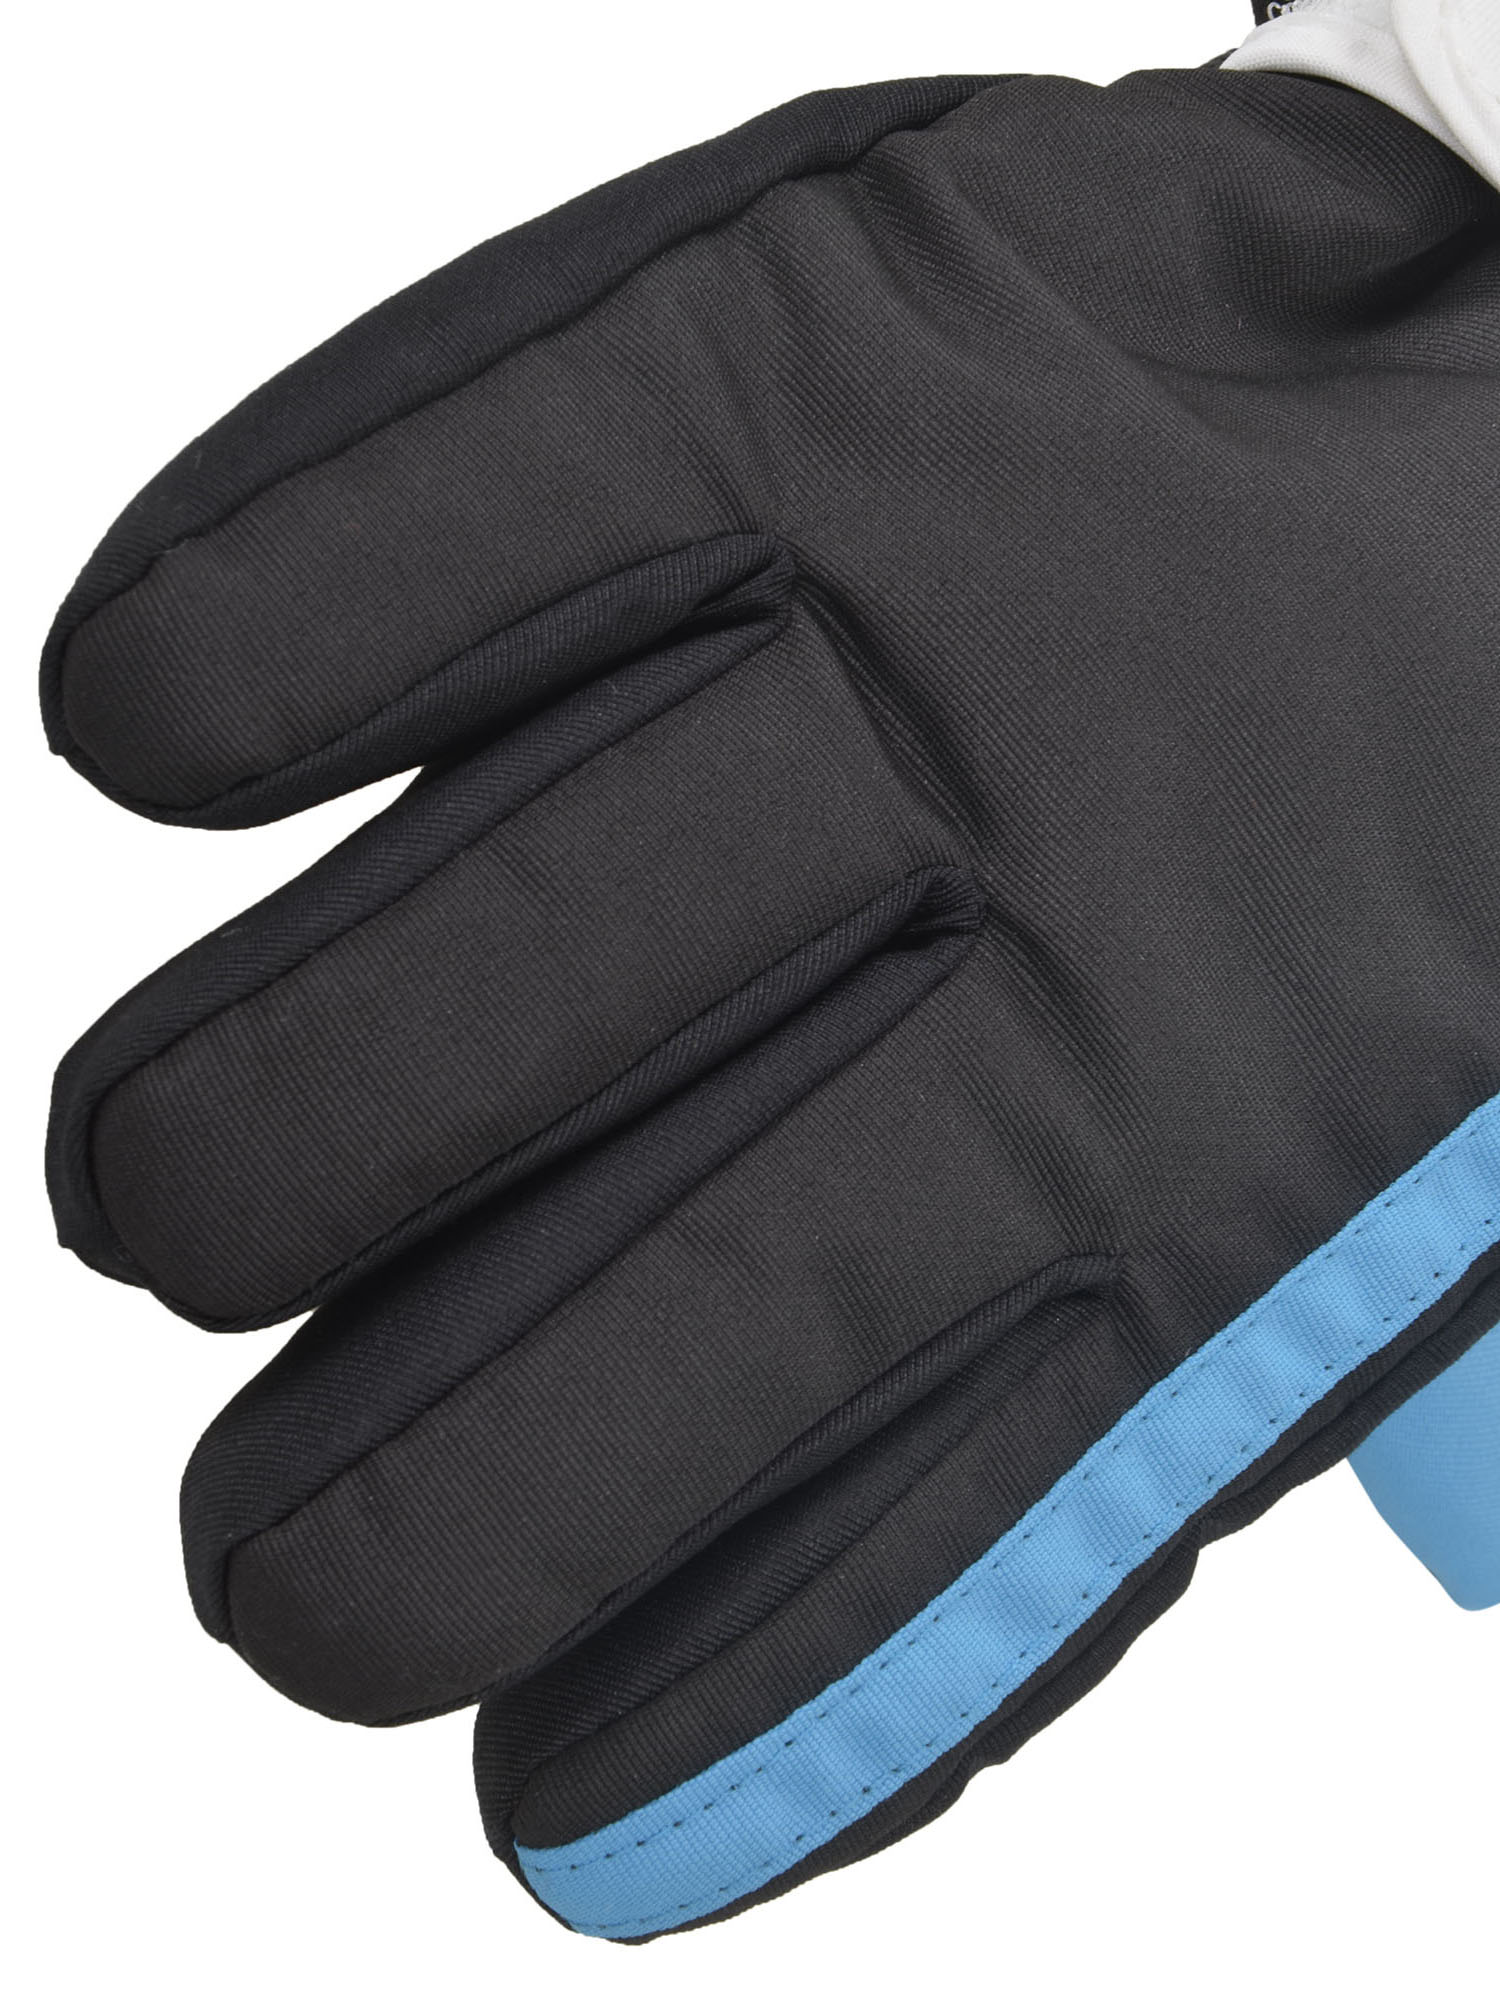 Simplicity Boys Kids Waterproof Thinsulate Colorblocked Snow Ski Gloves, M - image 4 of 4